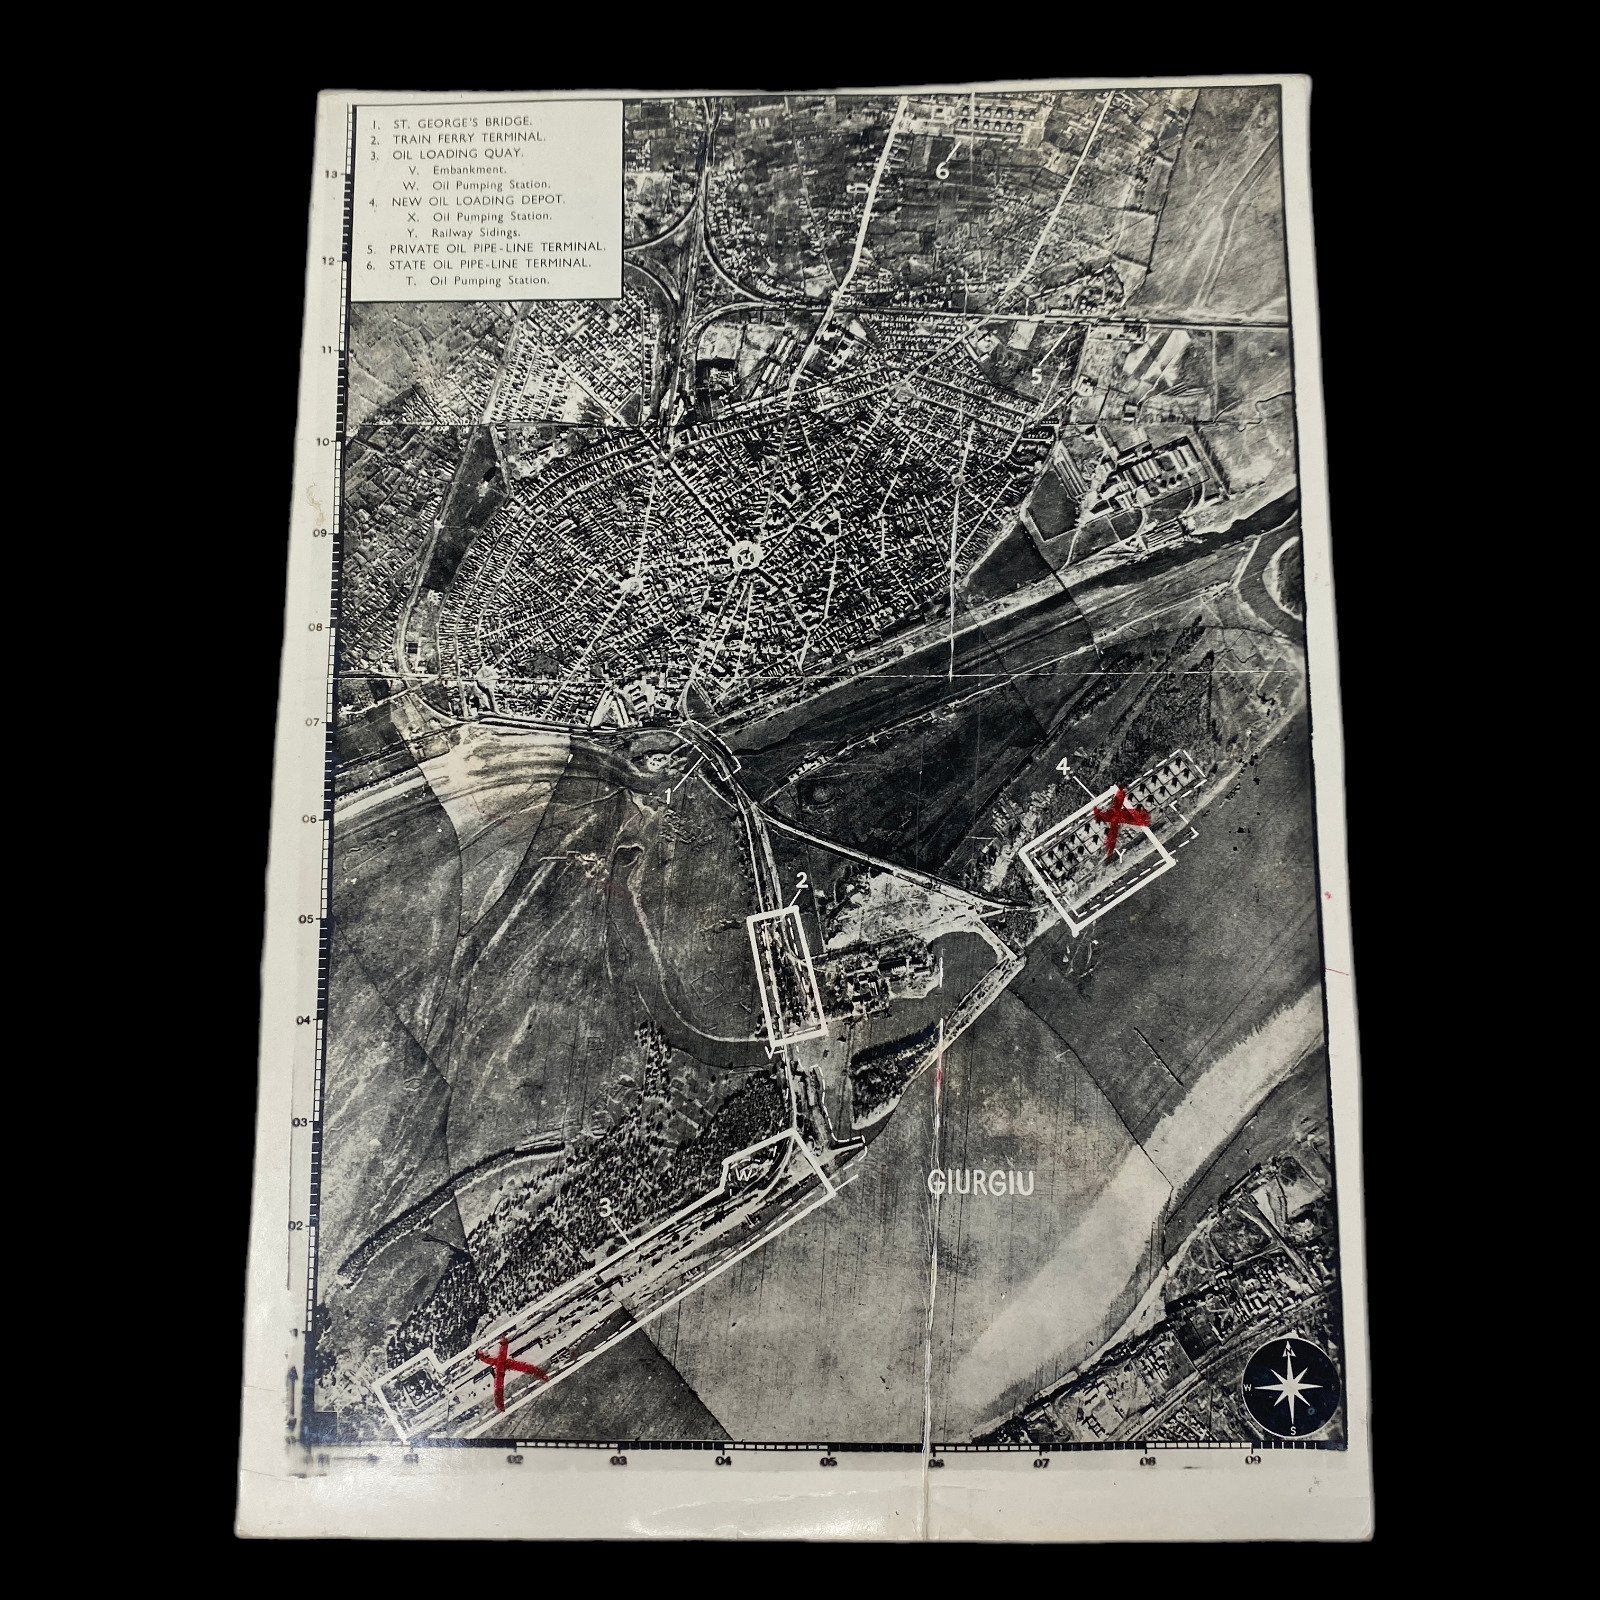 WWII 461st Bomb Group B-24 GIURGIU Mission Raid Photograph with Target Markings